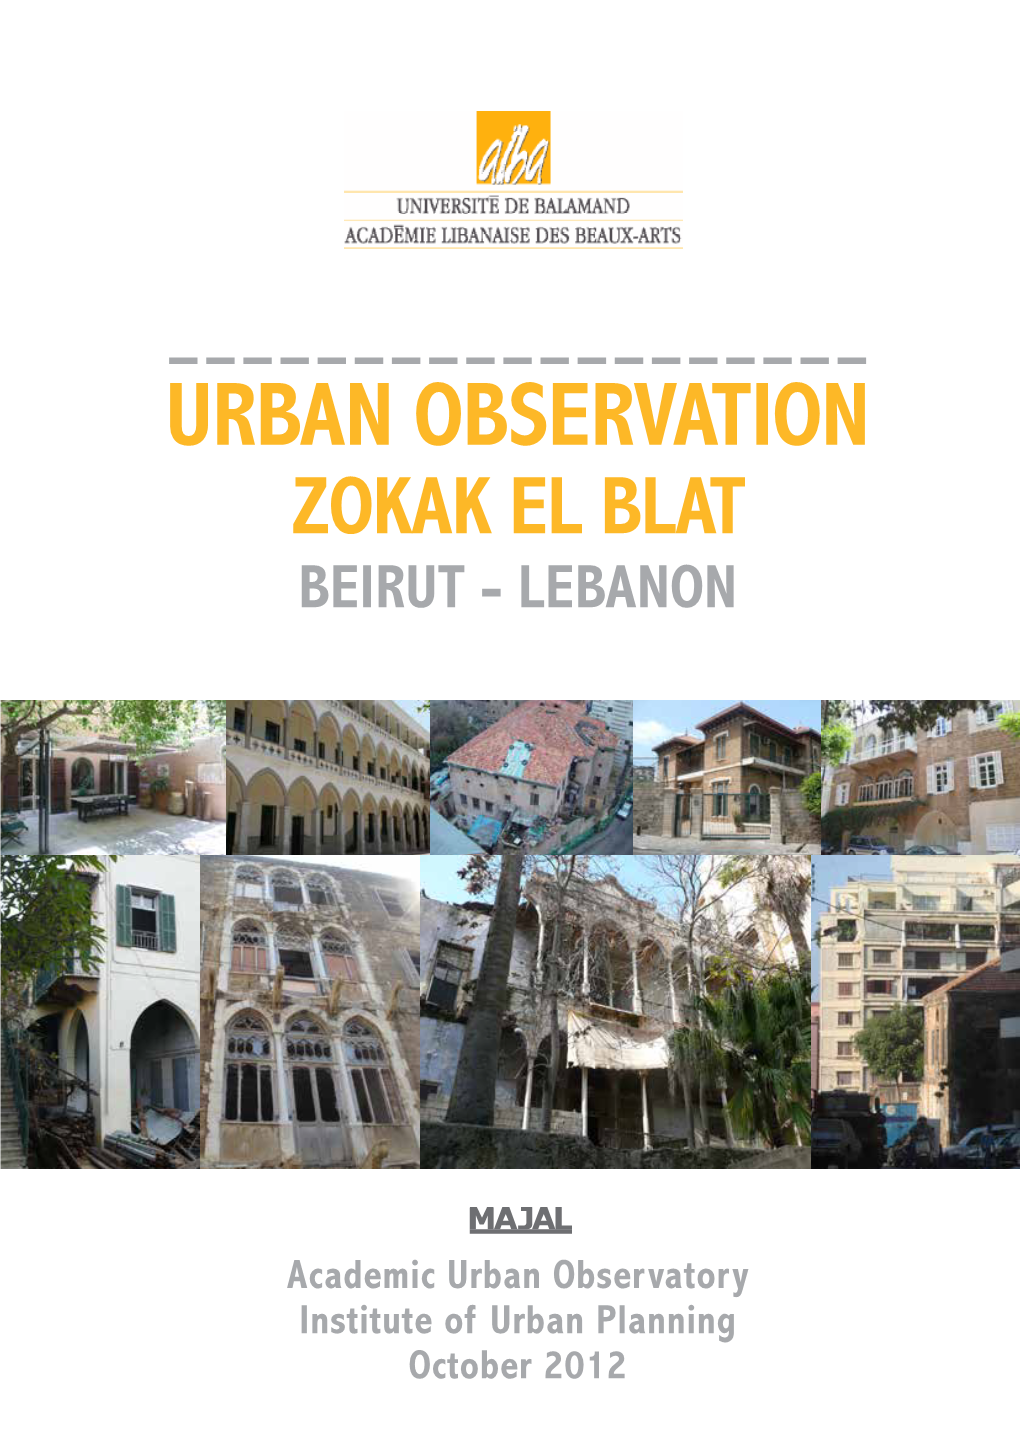 Urban Observation Zokak El Blat Beirut - Lebanon